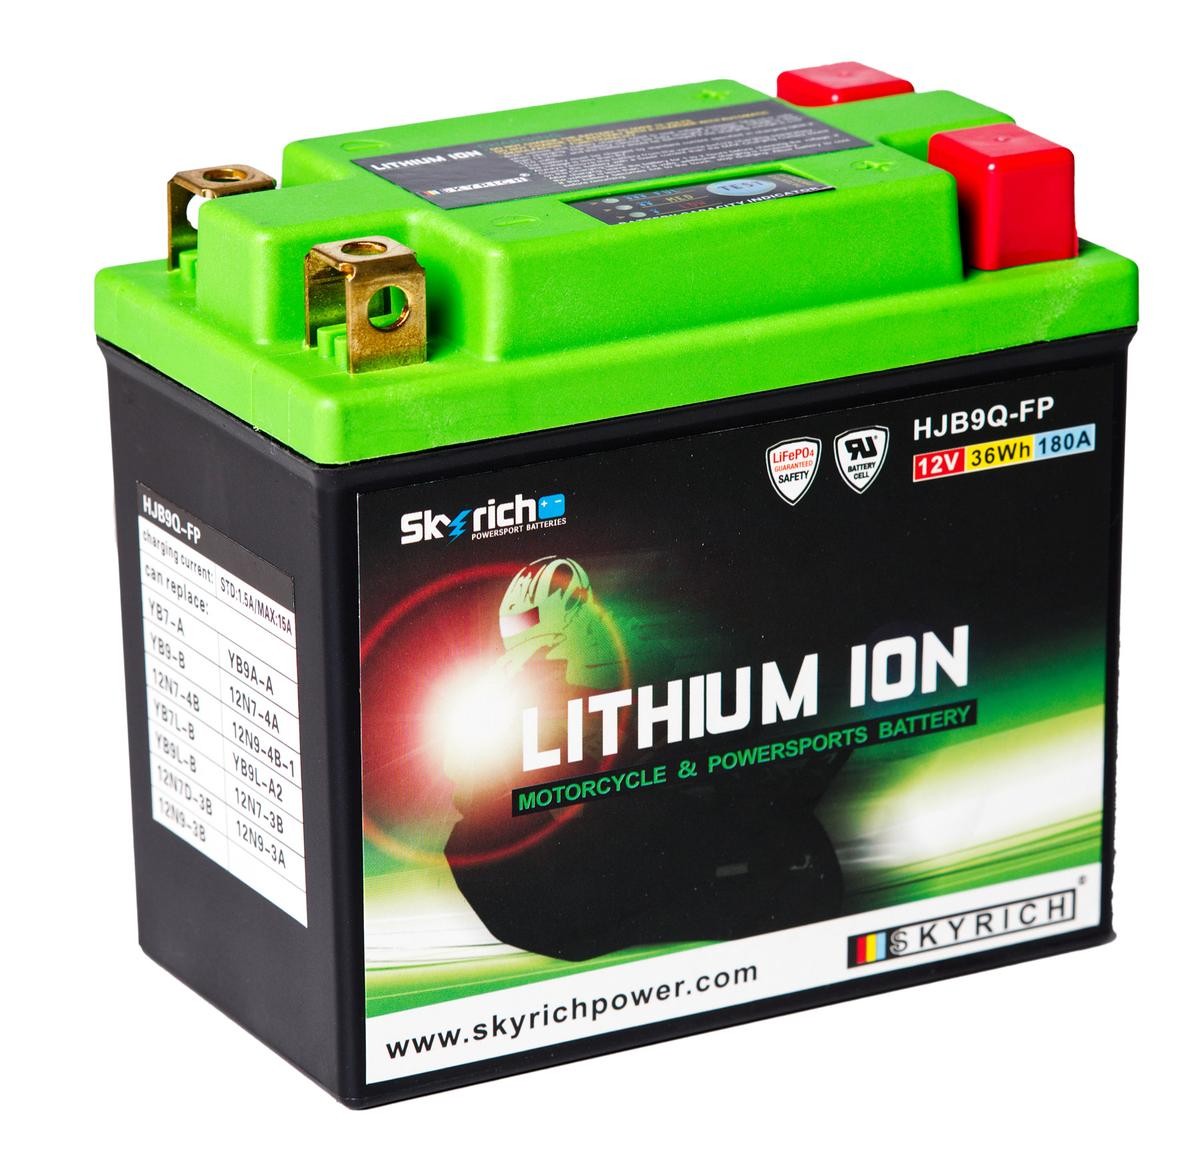 APRILIA SR Batterie 12V 3Ah 180A N Li-Ionen-Batterie SKYRICH LITHIUM ION HJB9Q-FP